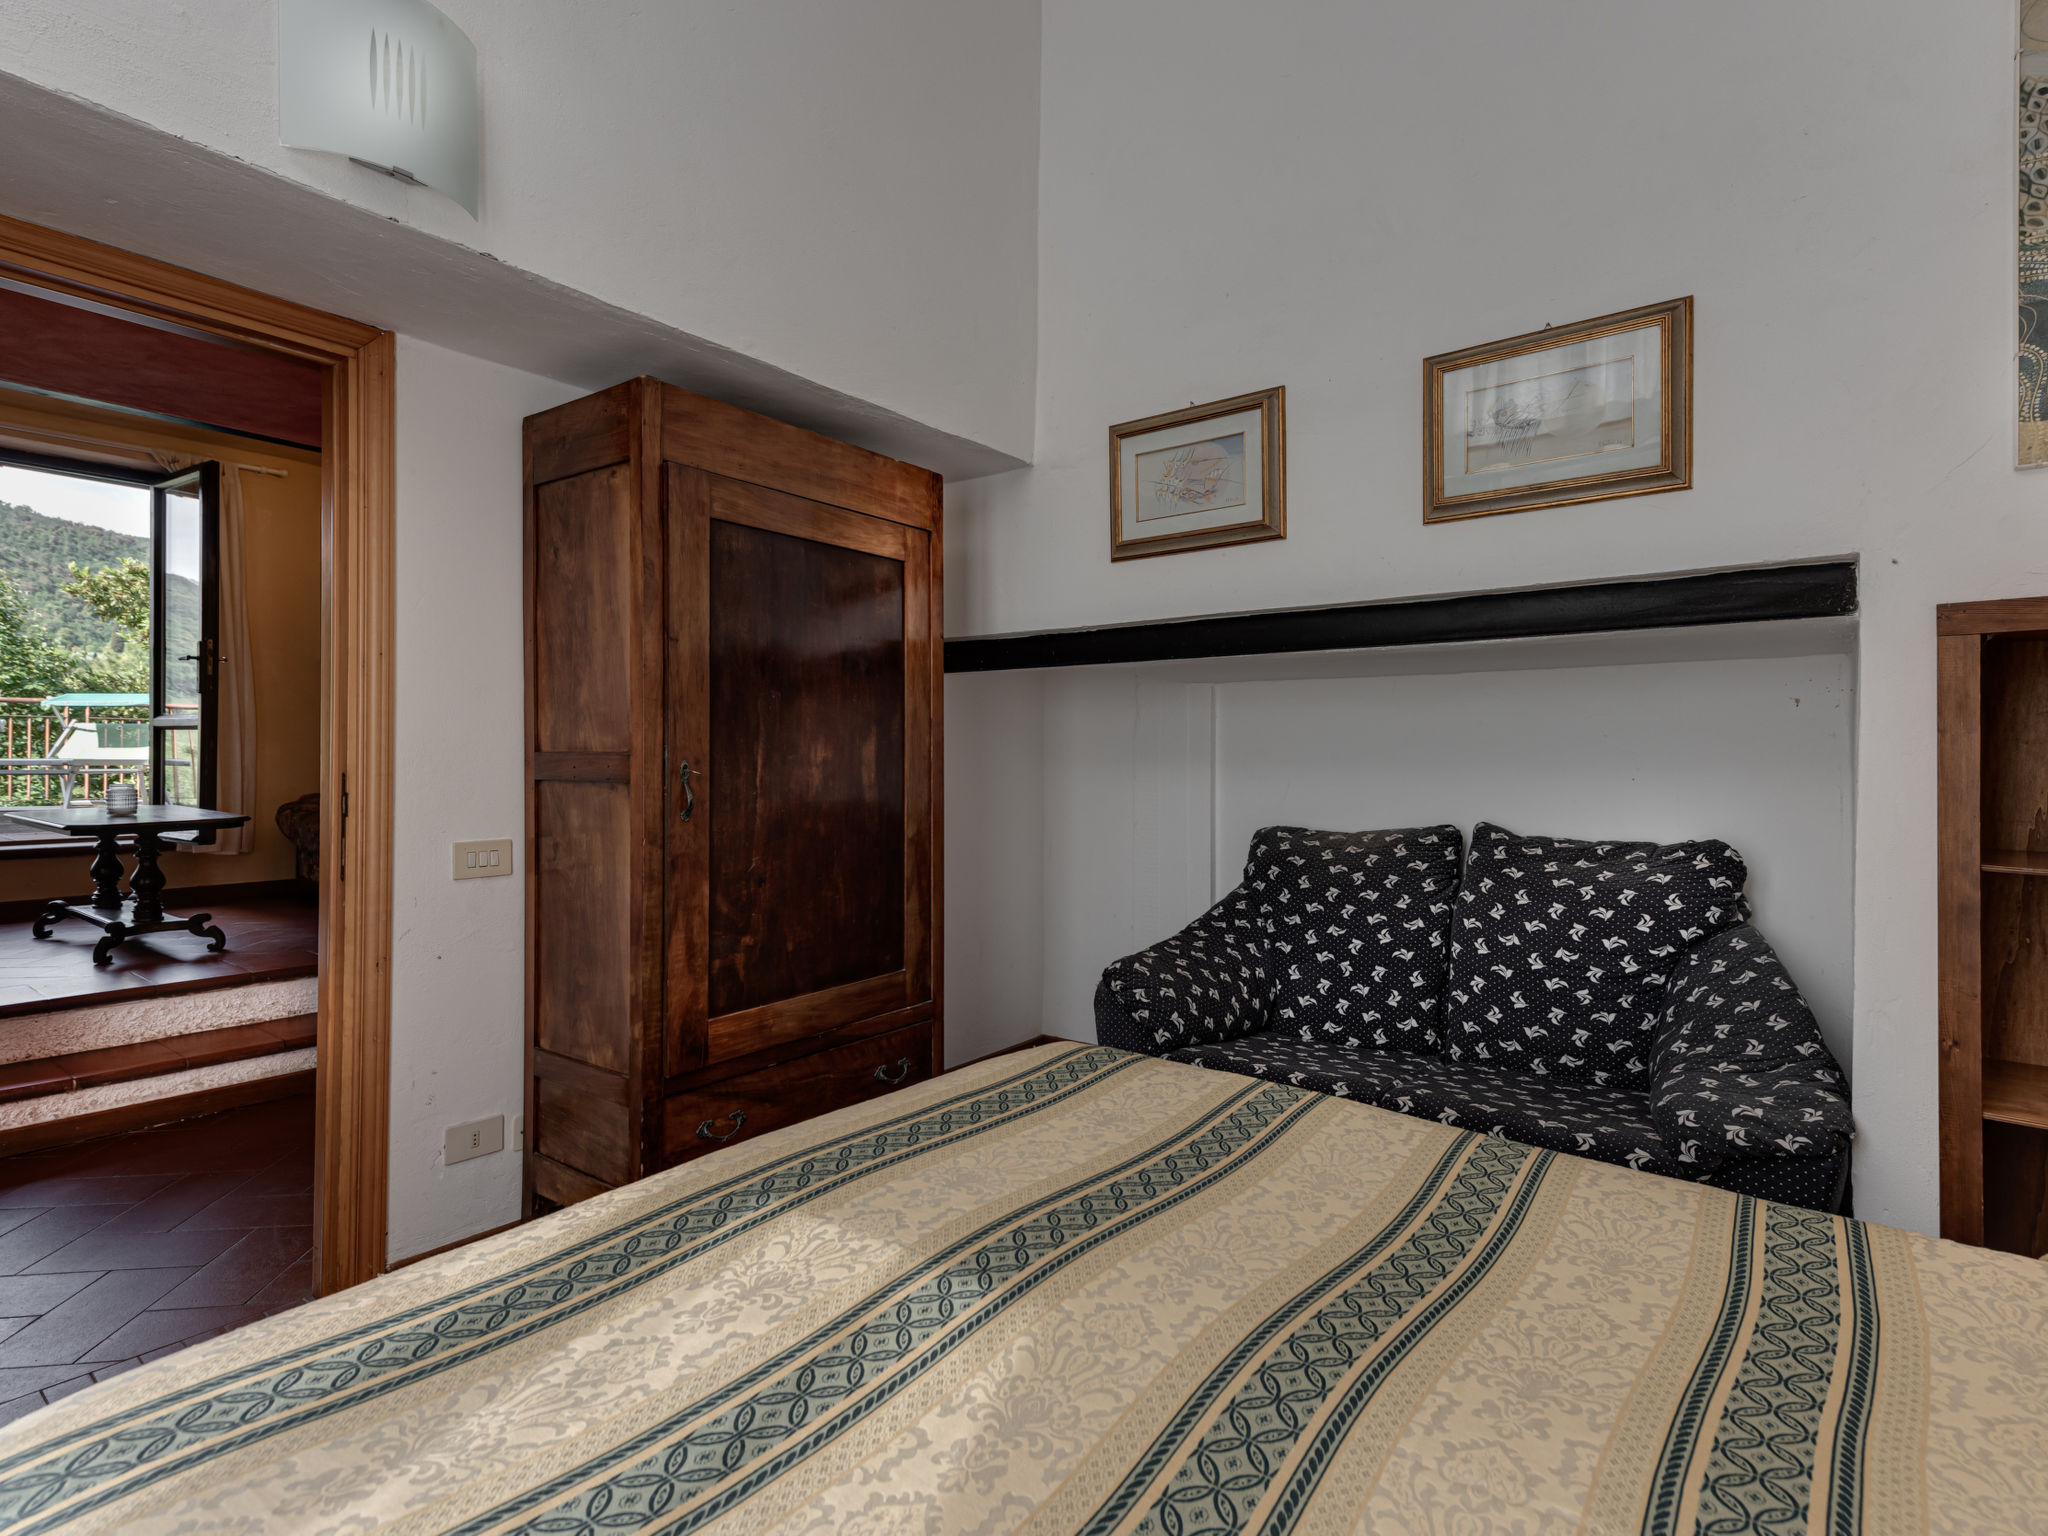 Foto 52 - Casa con 4 camere da letto a San Gimignano con piscina e giardino